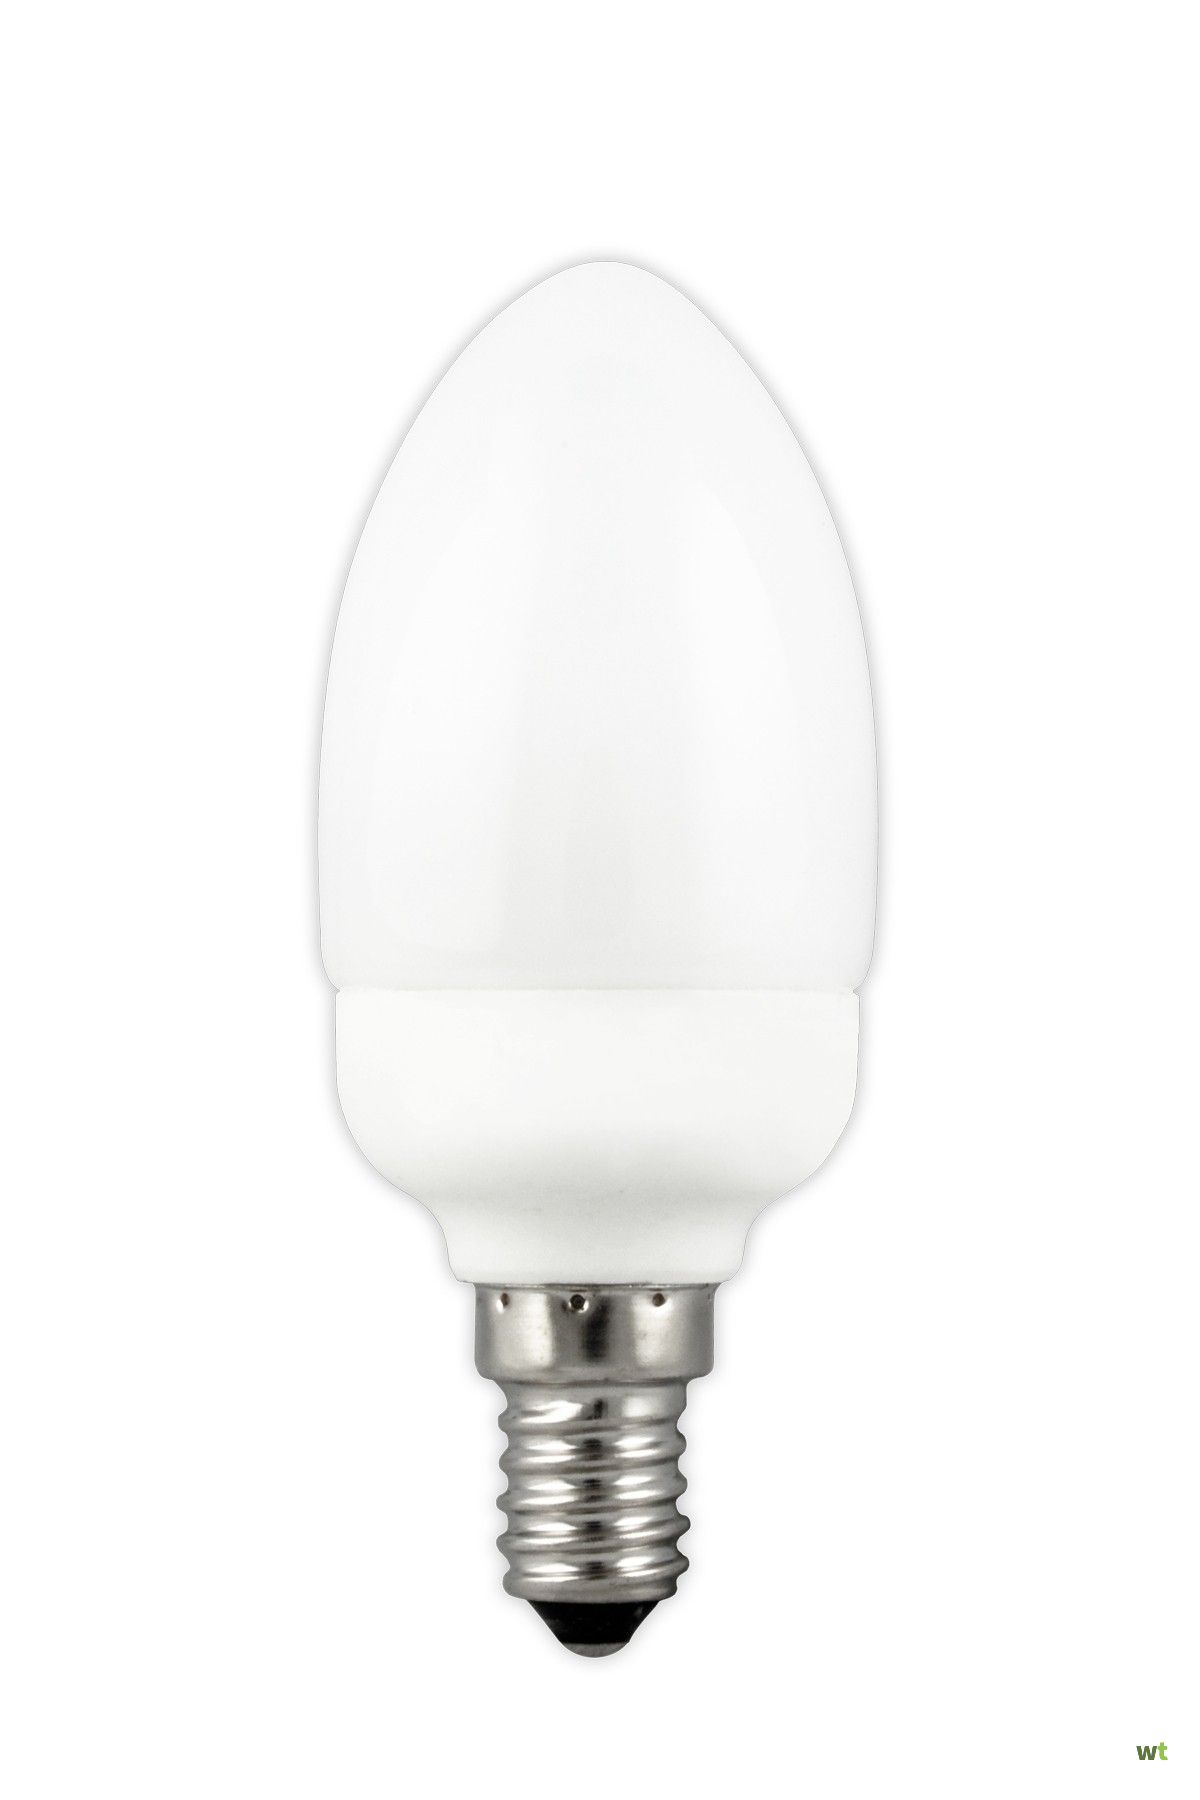 Extreem belangrijk Belofte James Dyson Spaarlamp mini kaars 230v 7w e14 Calex